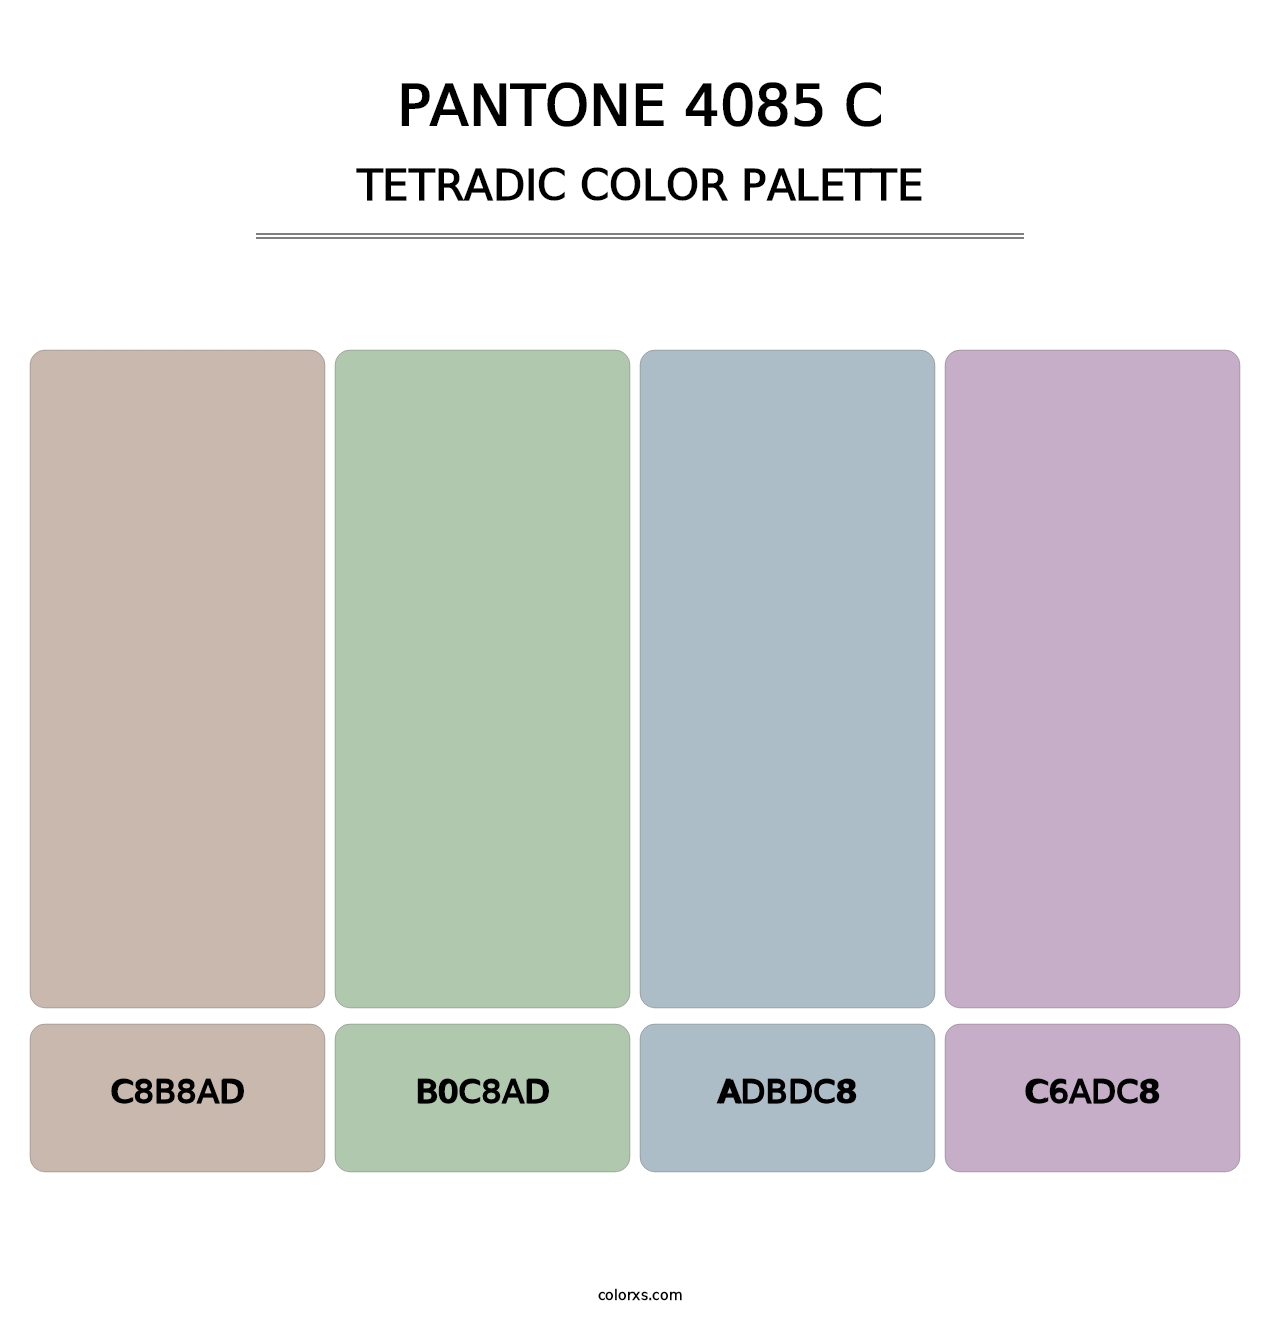 PANTONE 4085 C - Tetradic Color Palette